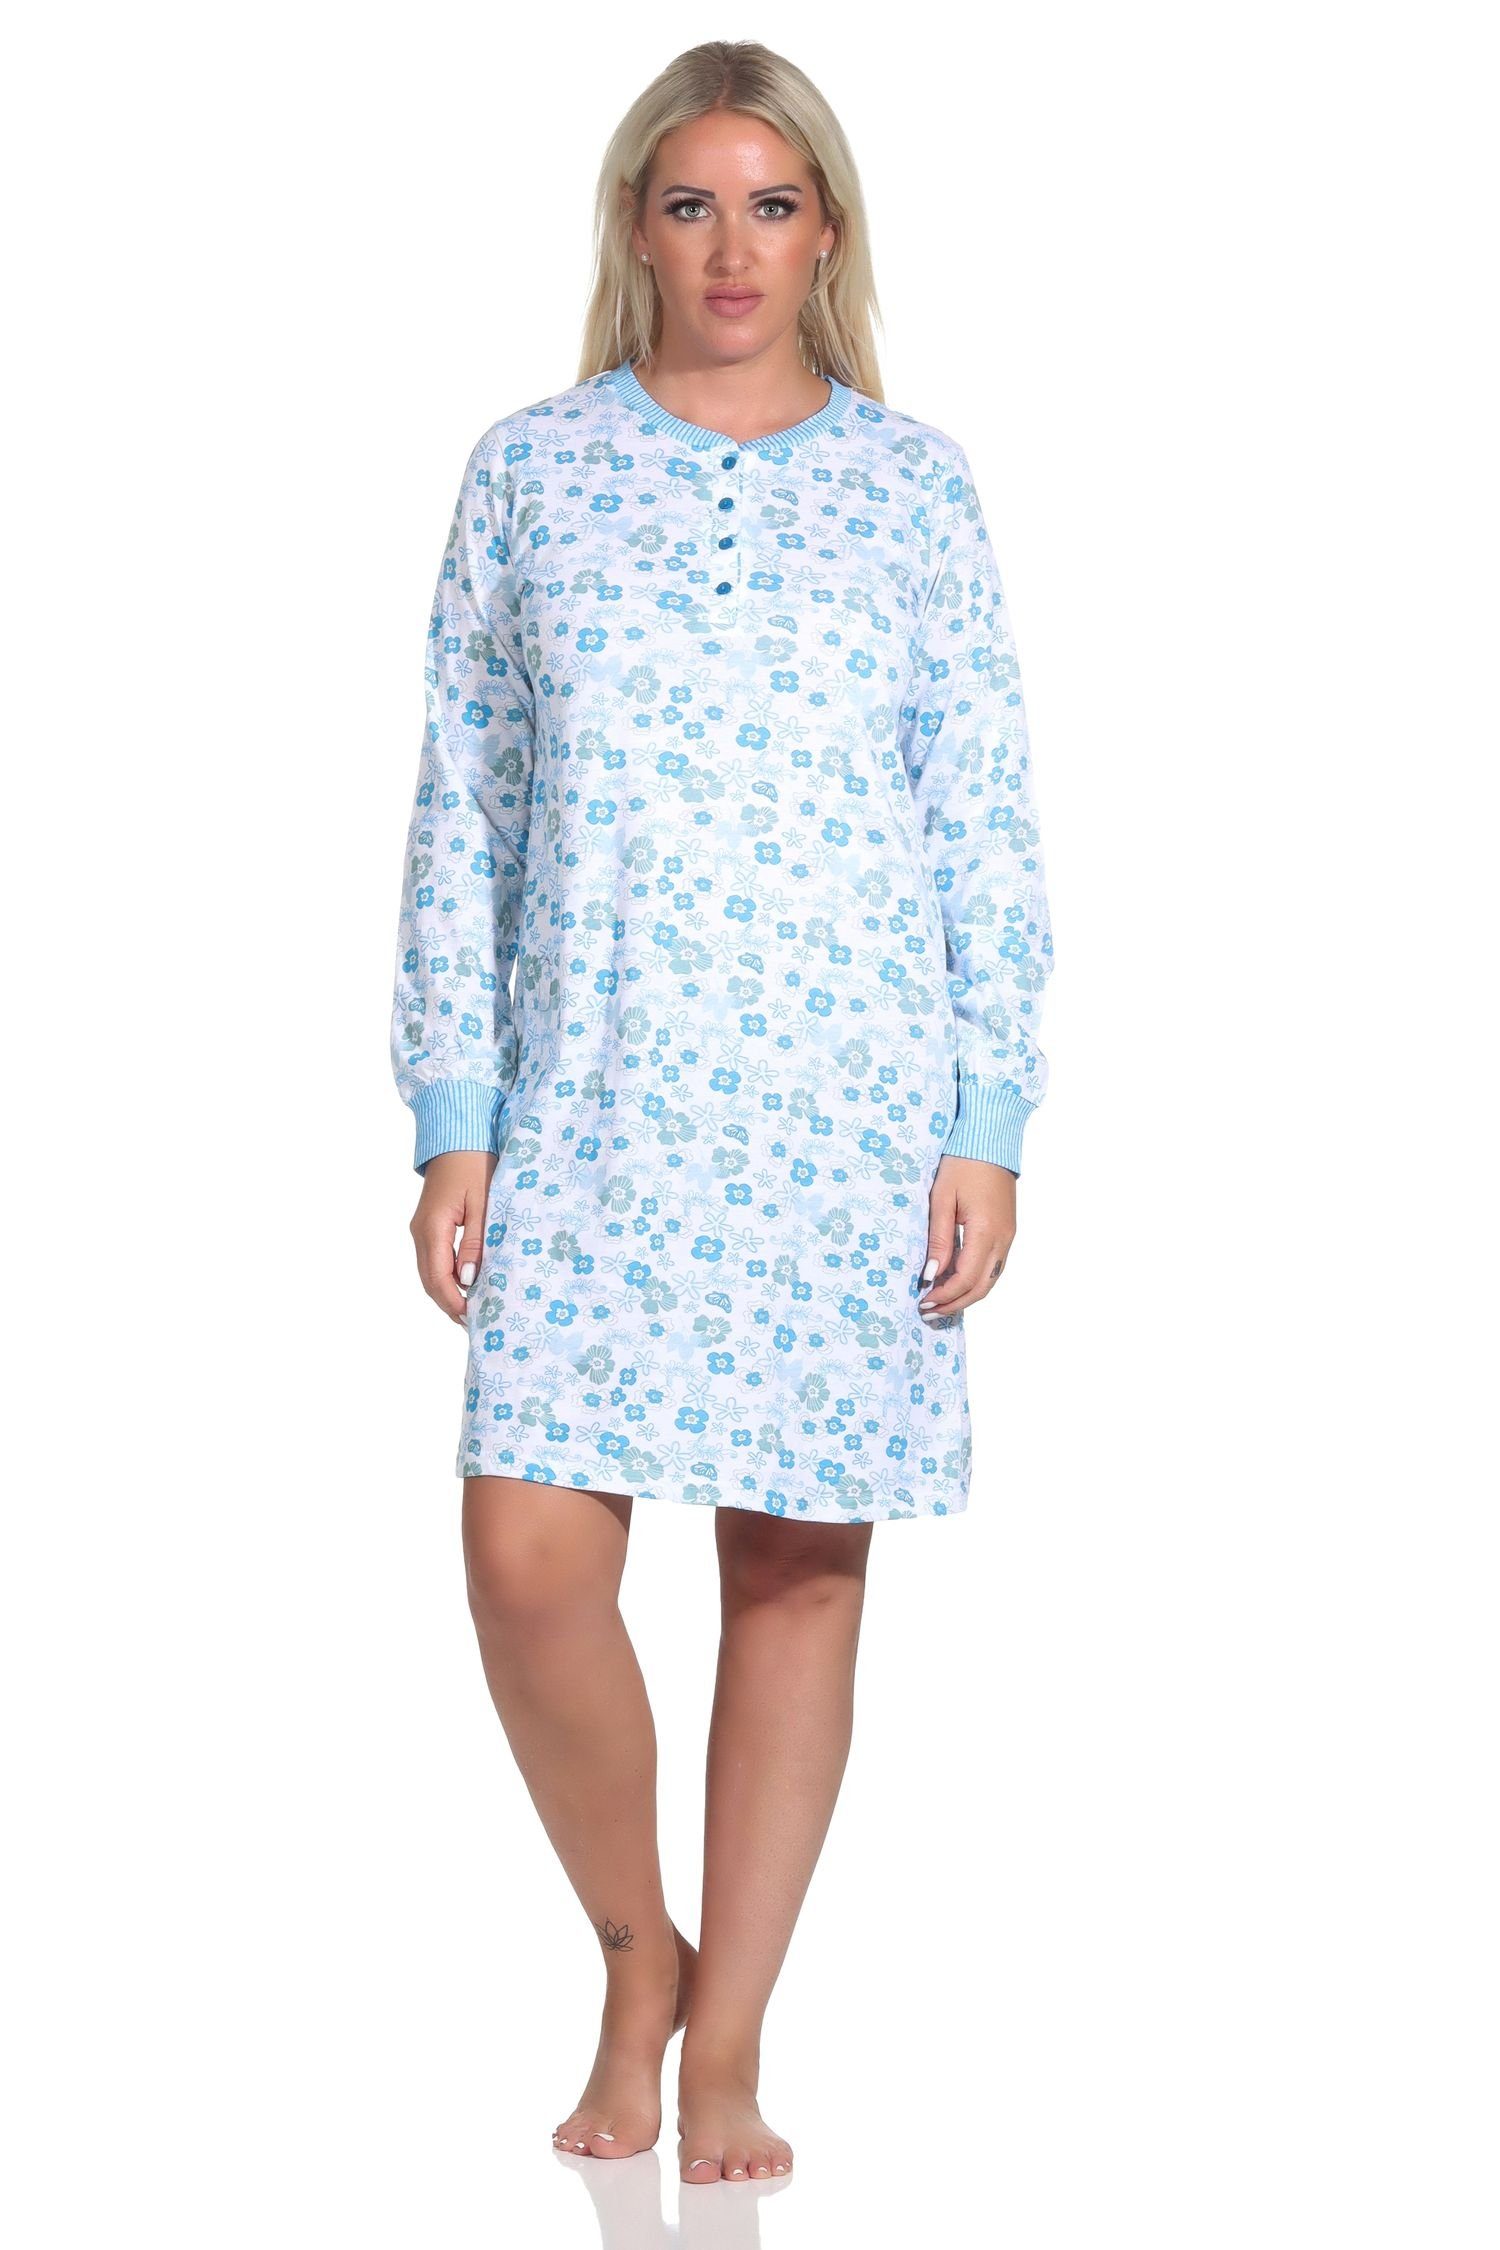 Ärmeln mit langarm in Bündchen floraler Damen Nachthemd Optik den Nachthemd blau an Normann